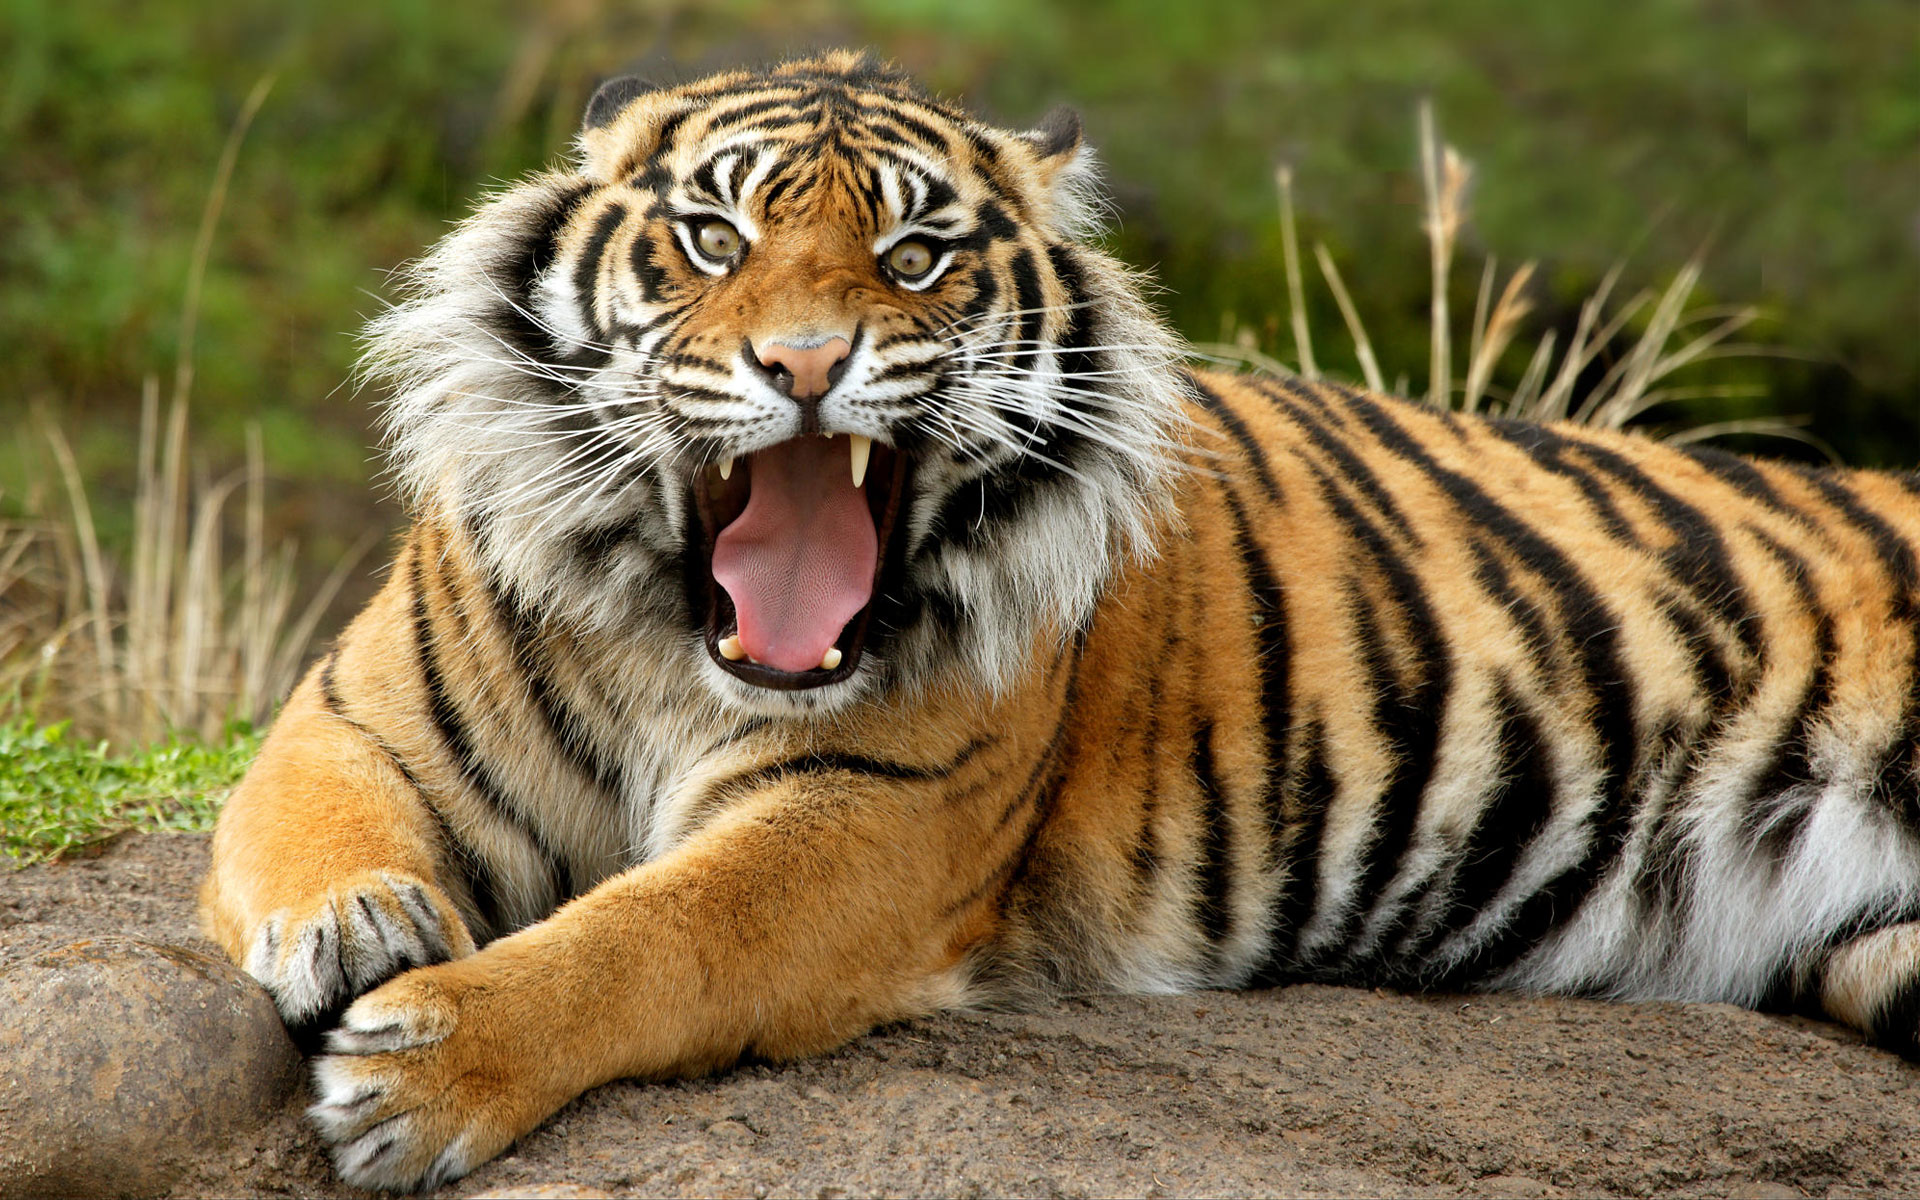 269429 descargar imagen animales, tigre, california, gato, san diego, tigre de sumatra, gatos: fondos de pantalla y protectores de pantalla gratis